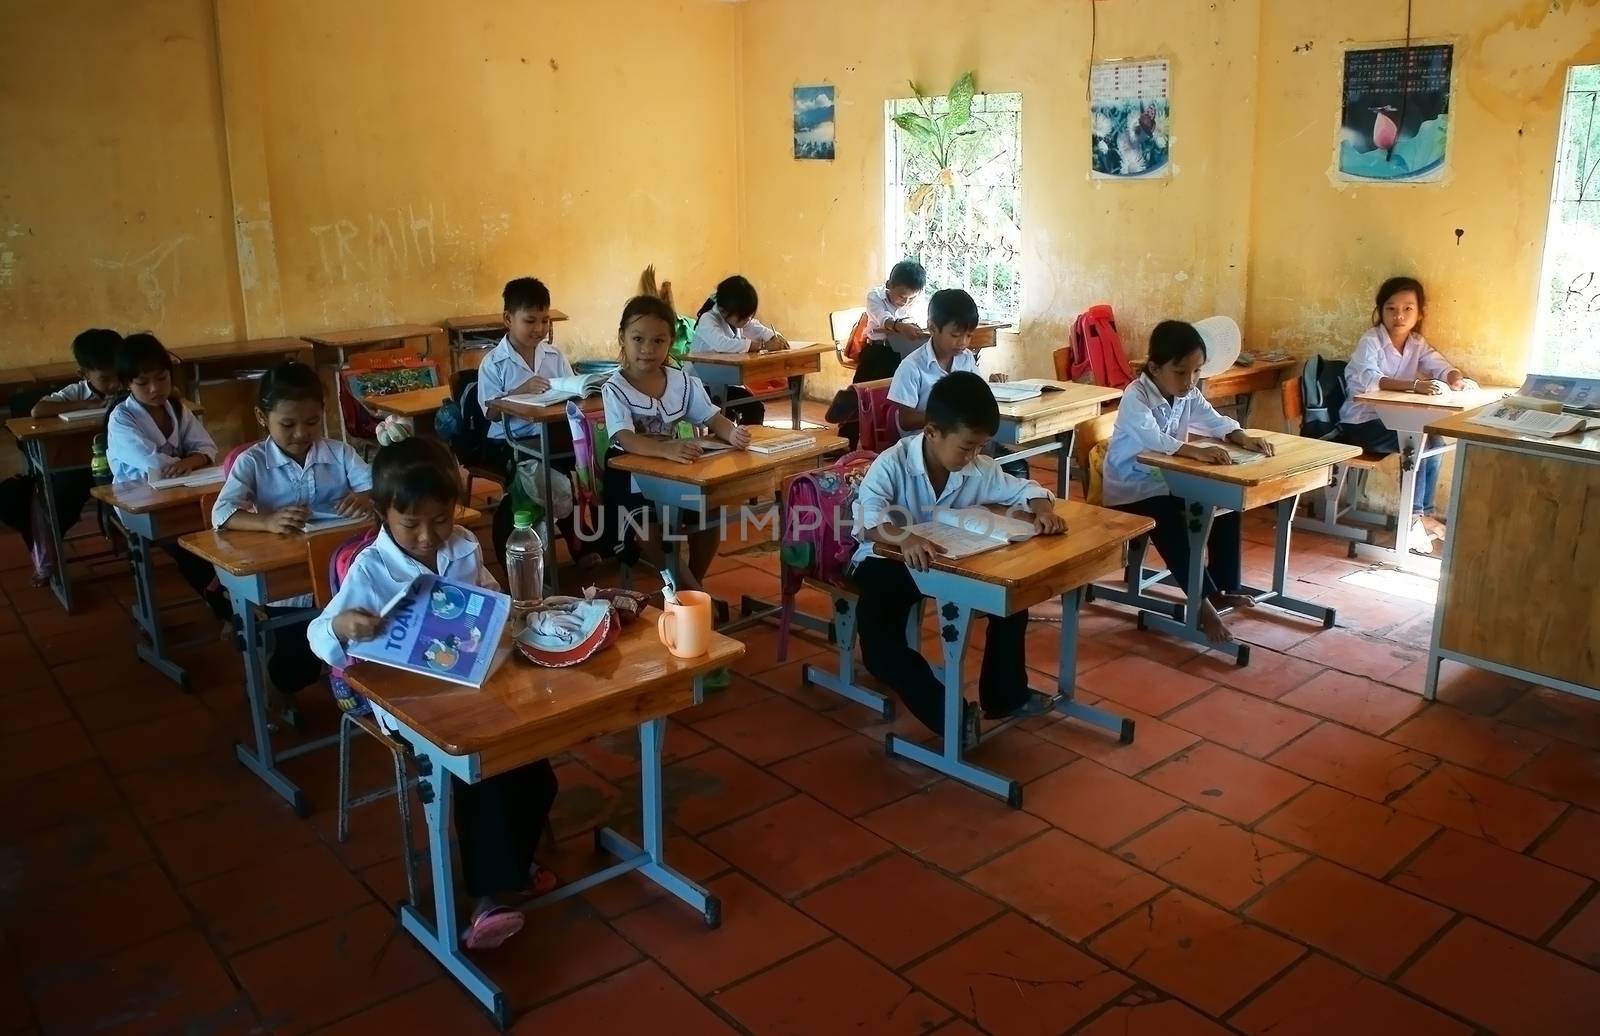 LONG AN, VIET NAM- NOV 11: Primary pupil in school time of primary school in Long An, VietNam on Nov 11, 2013